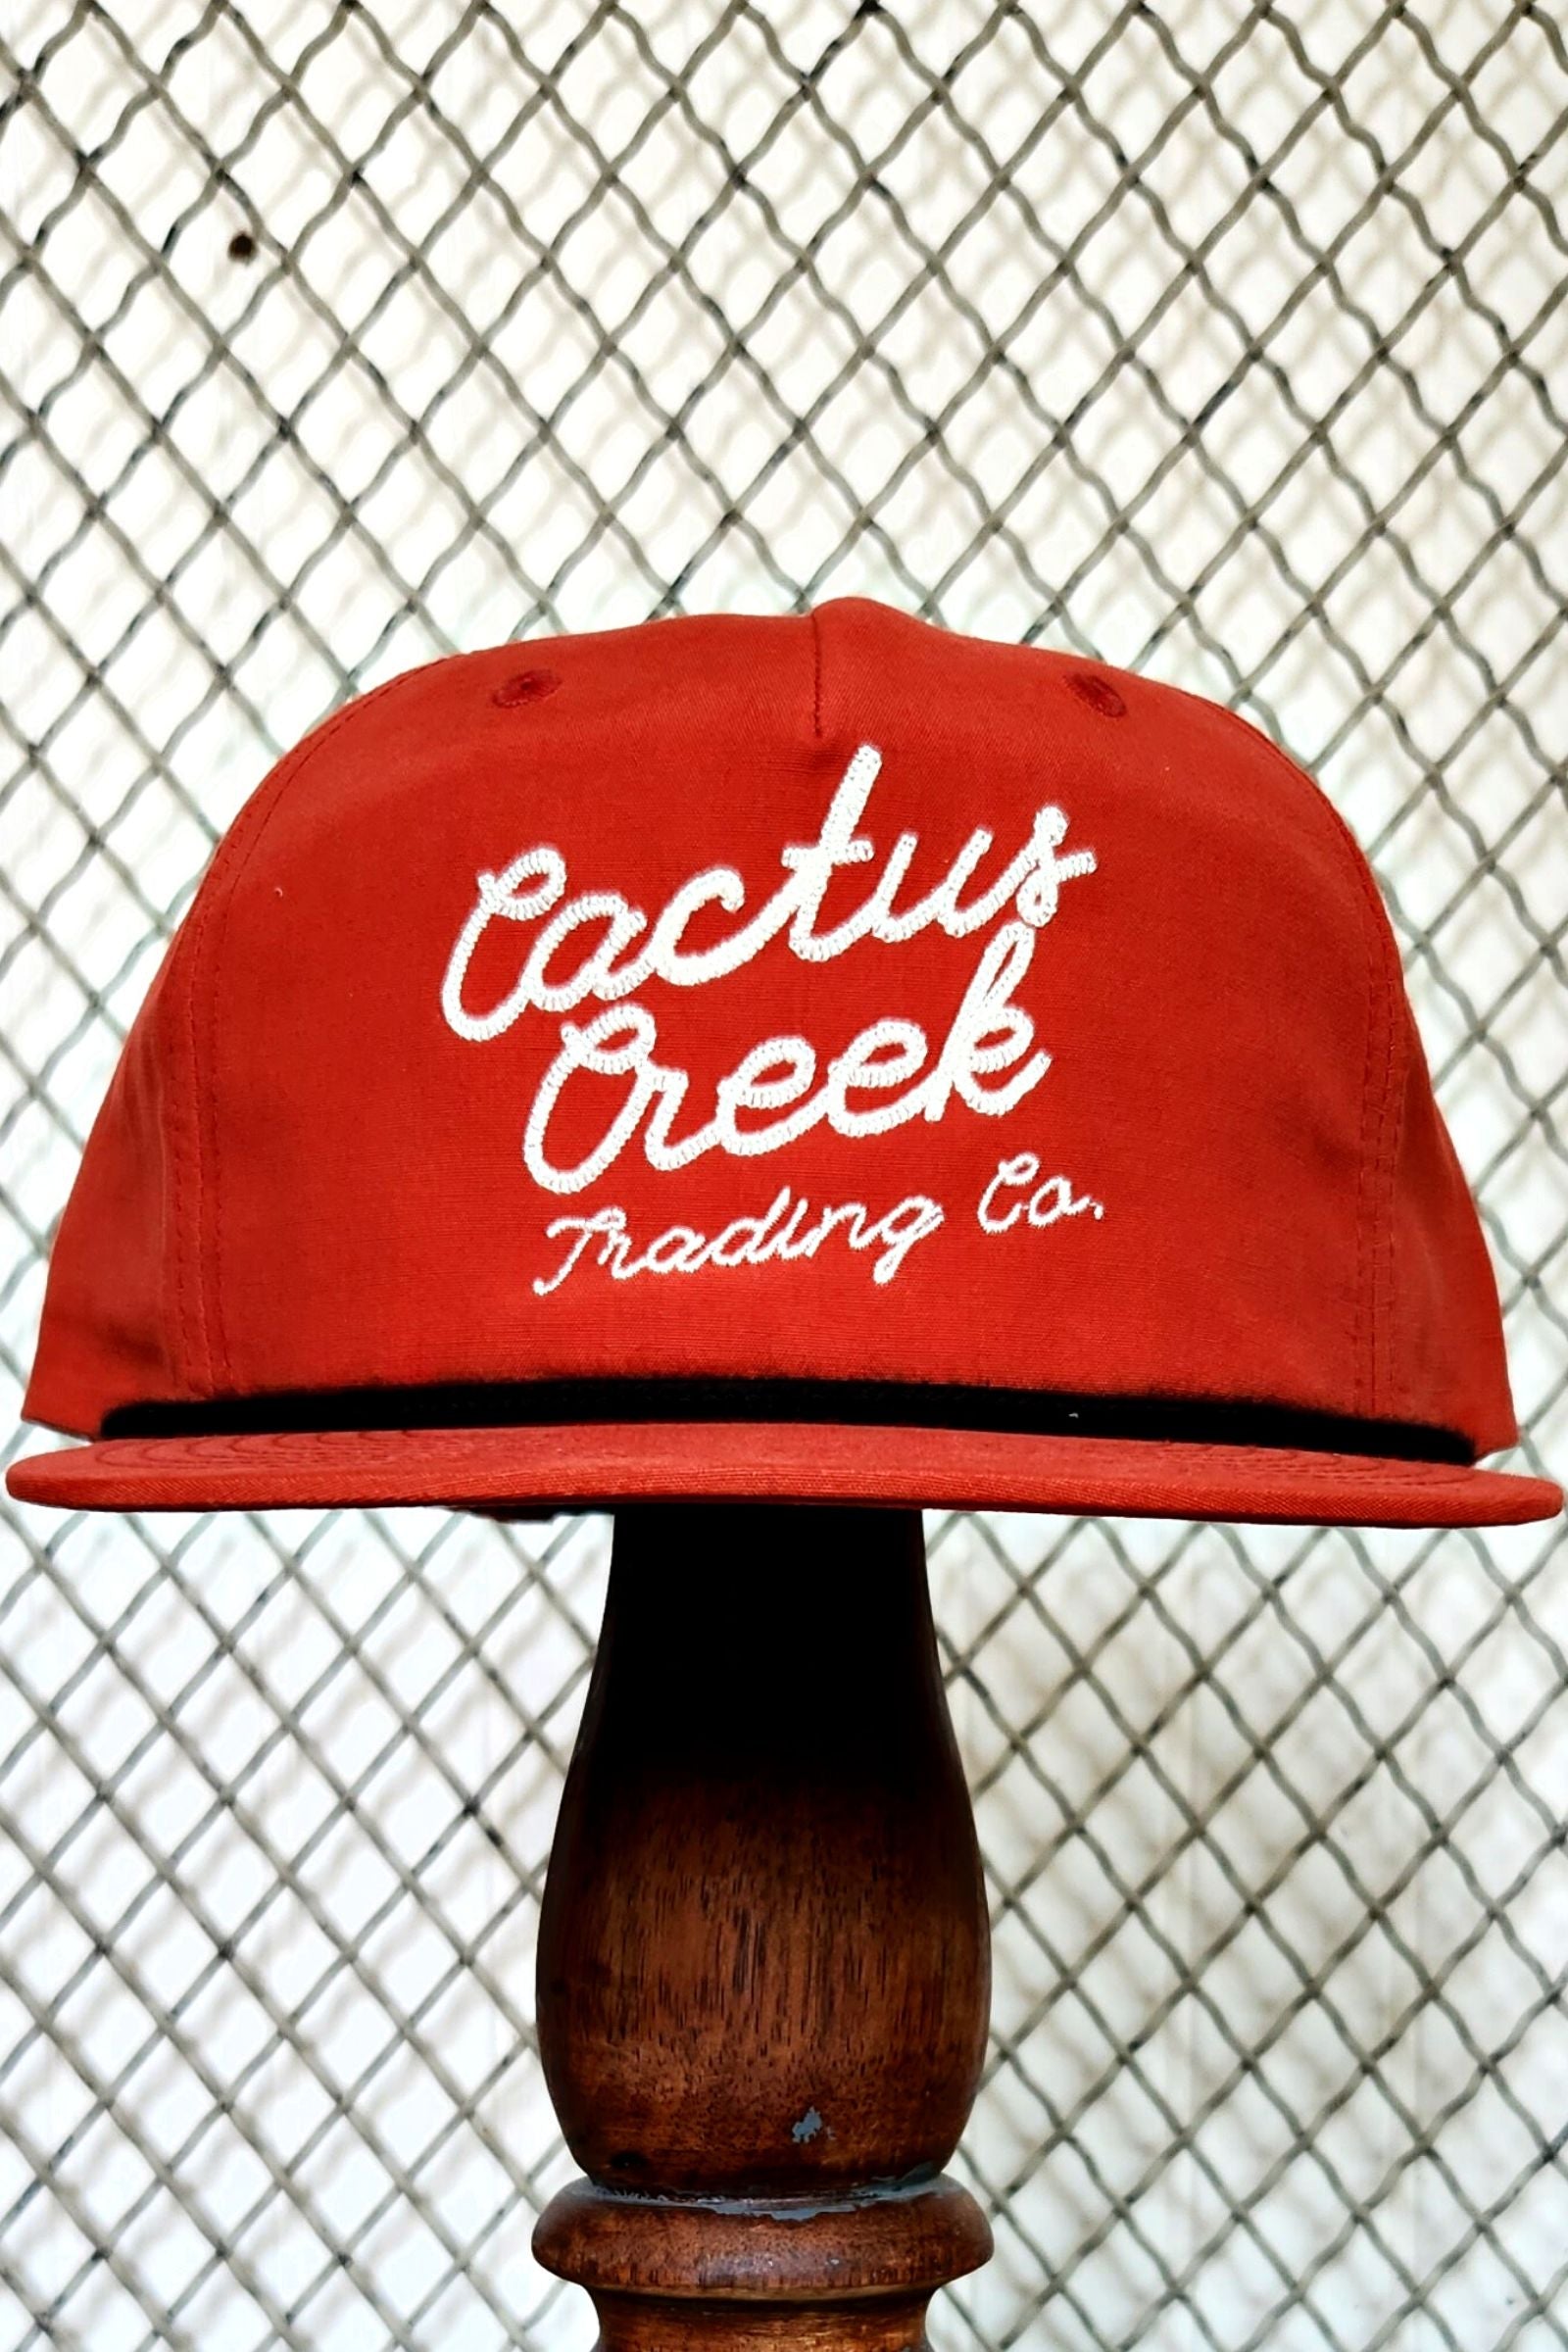 Cactus Creek Trading Co. Orange Hat